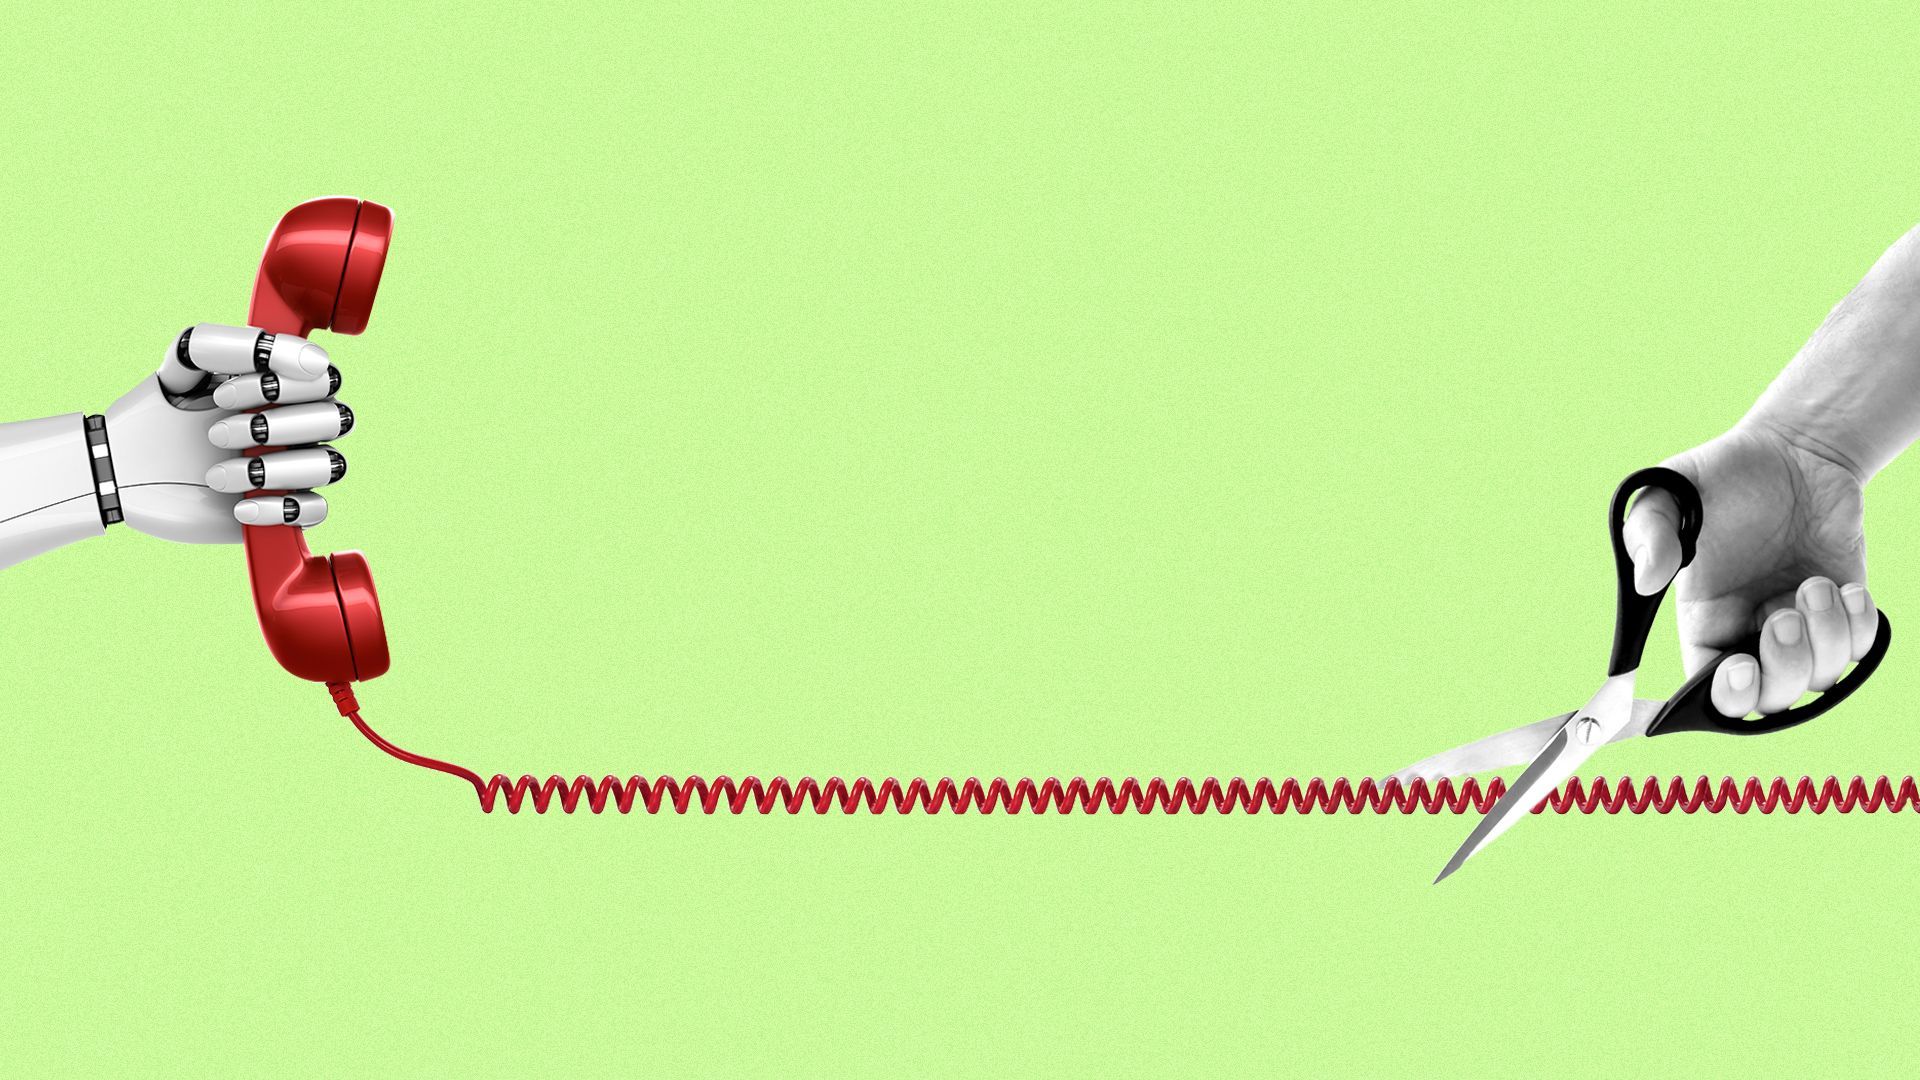 Scissors cut the cord on an AI phone